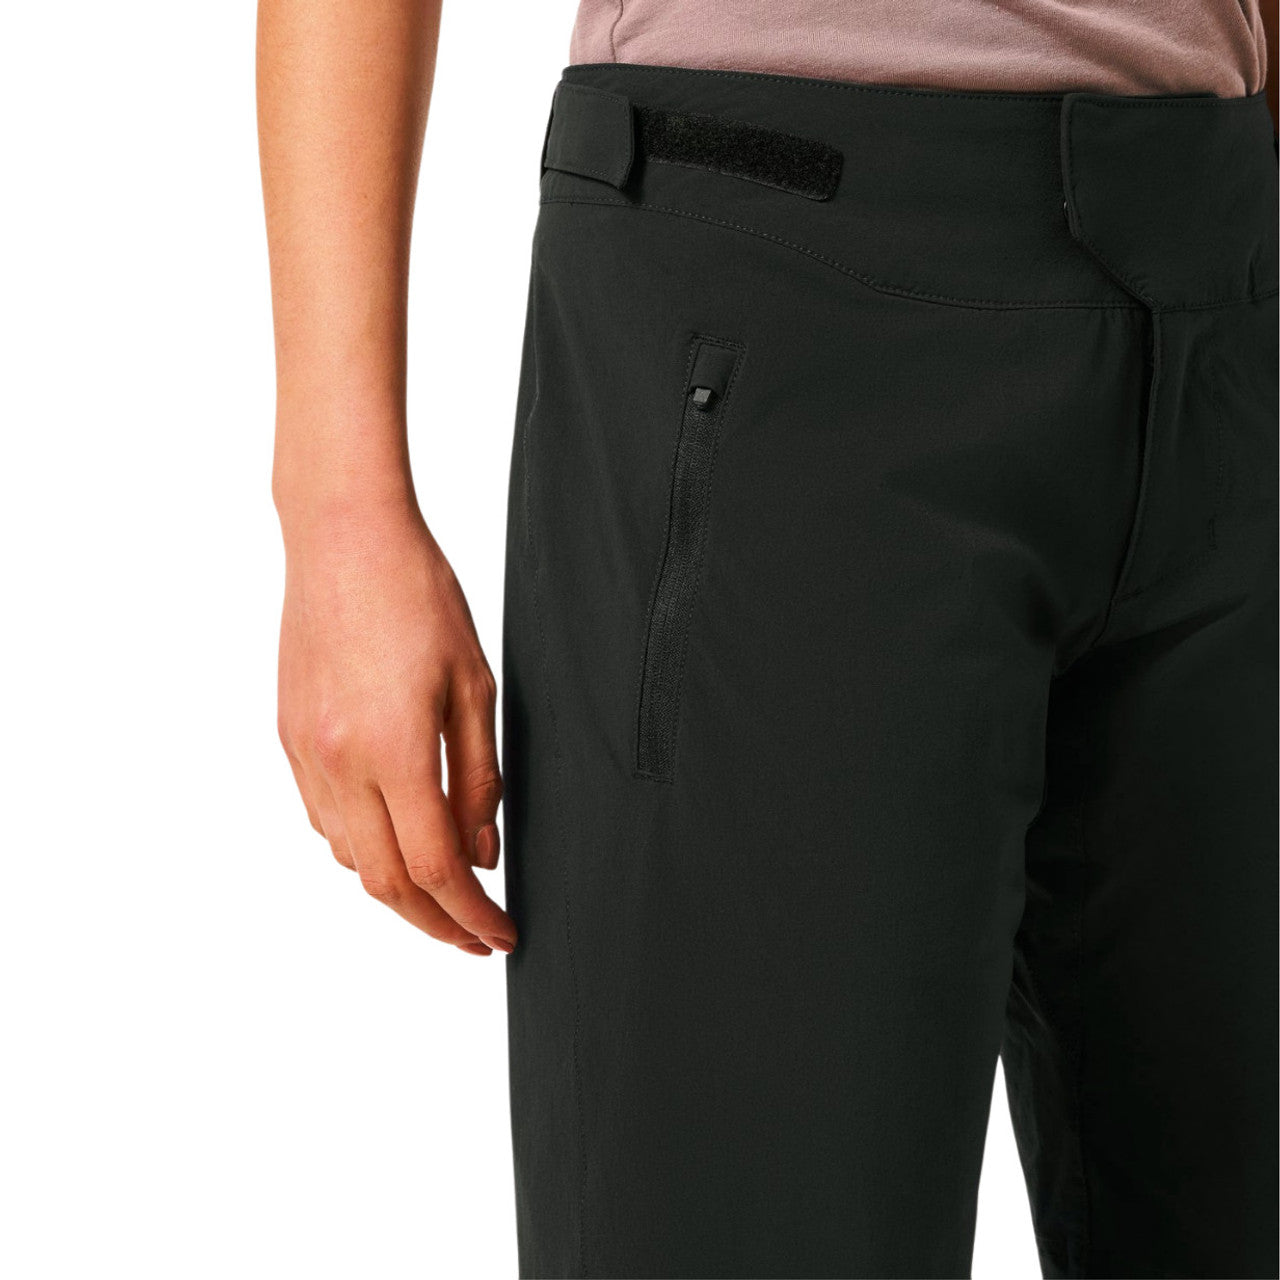 Oakley Women's Factory Pilot Lite Shell Shorts - Women's M-30 - Blackout